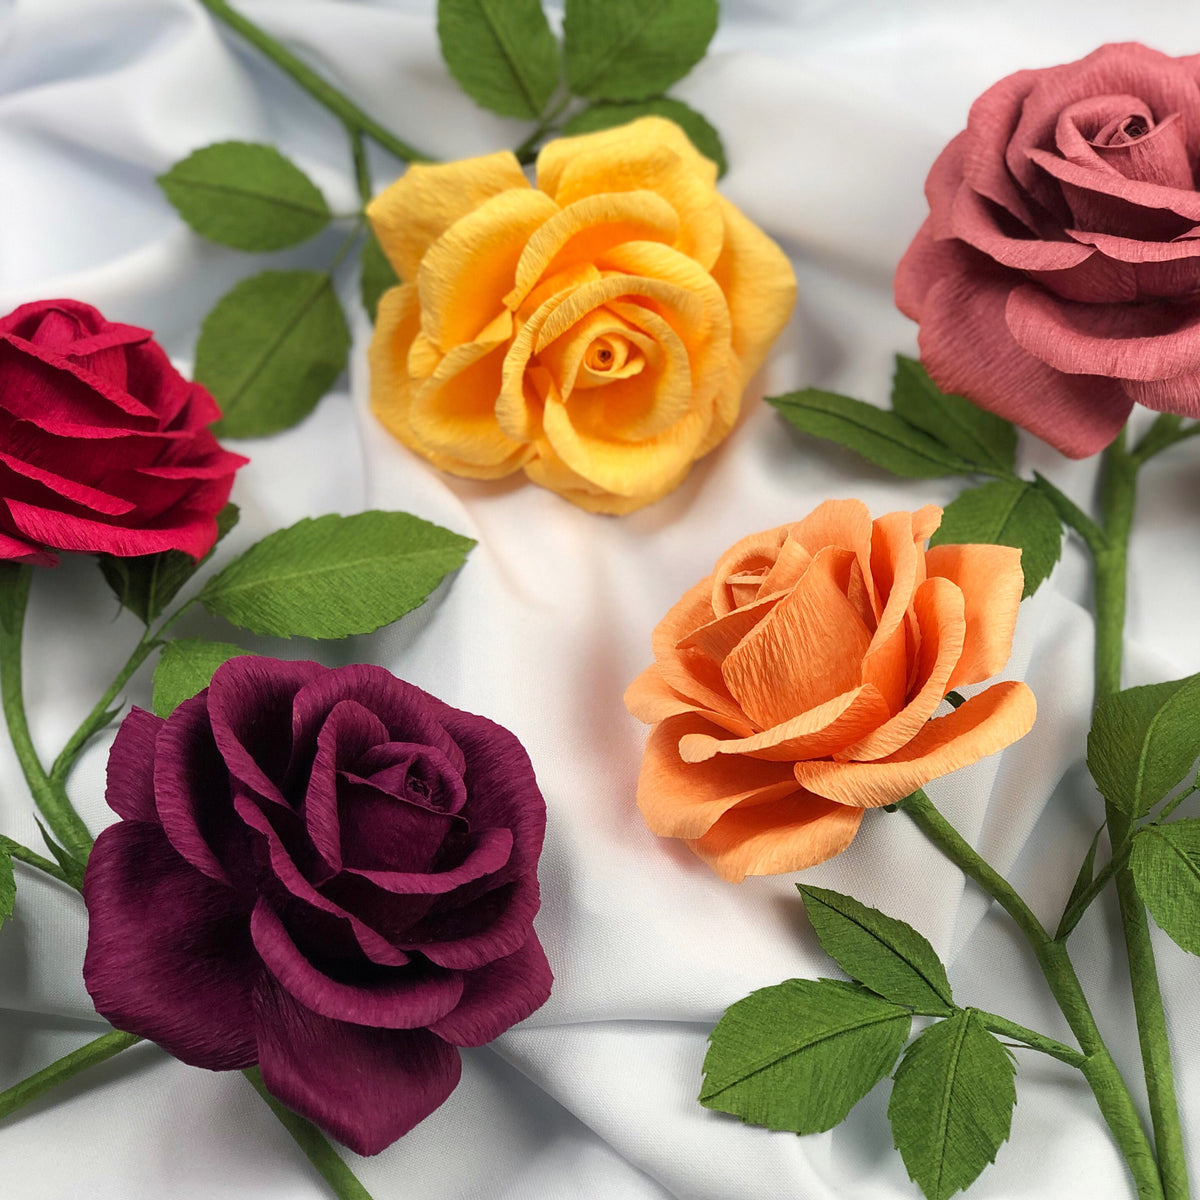 Red, Yellow, Pink, Orange and Dark Purple paper roses lying across white draped fabric